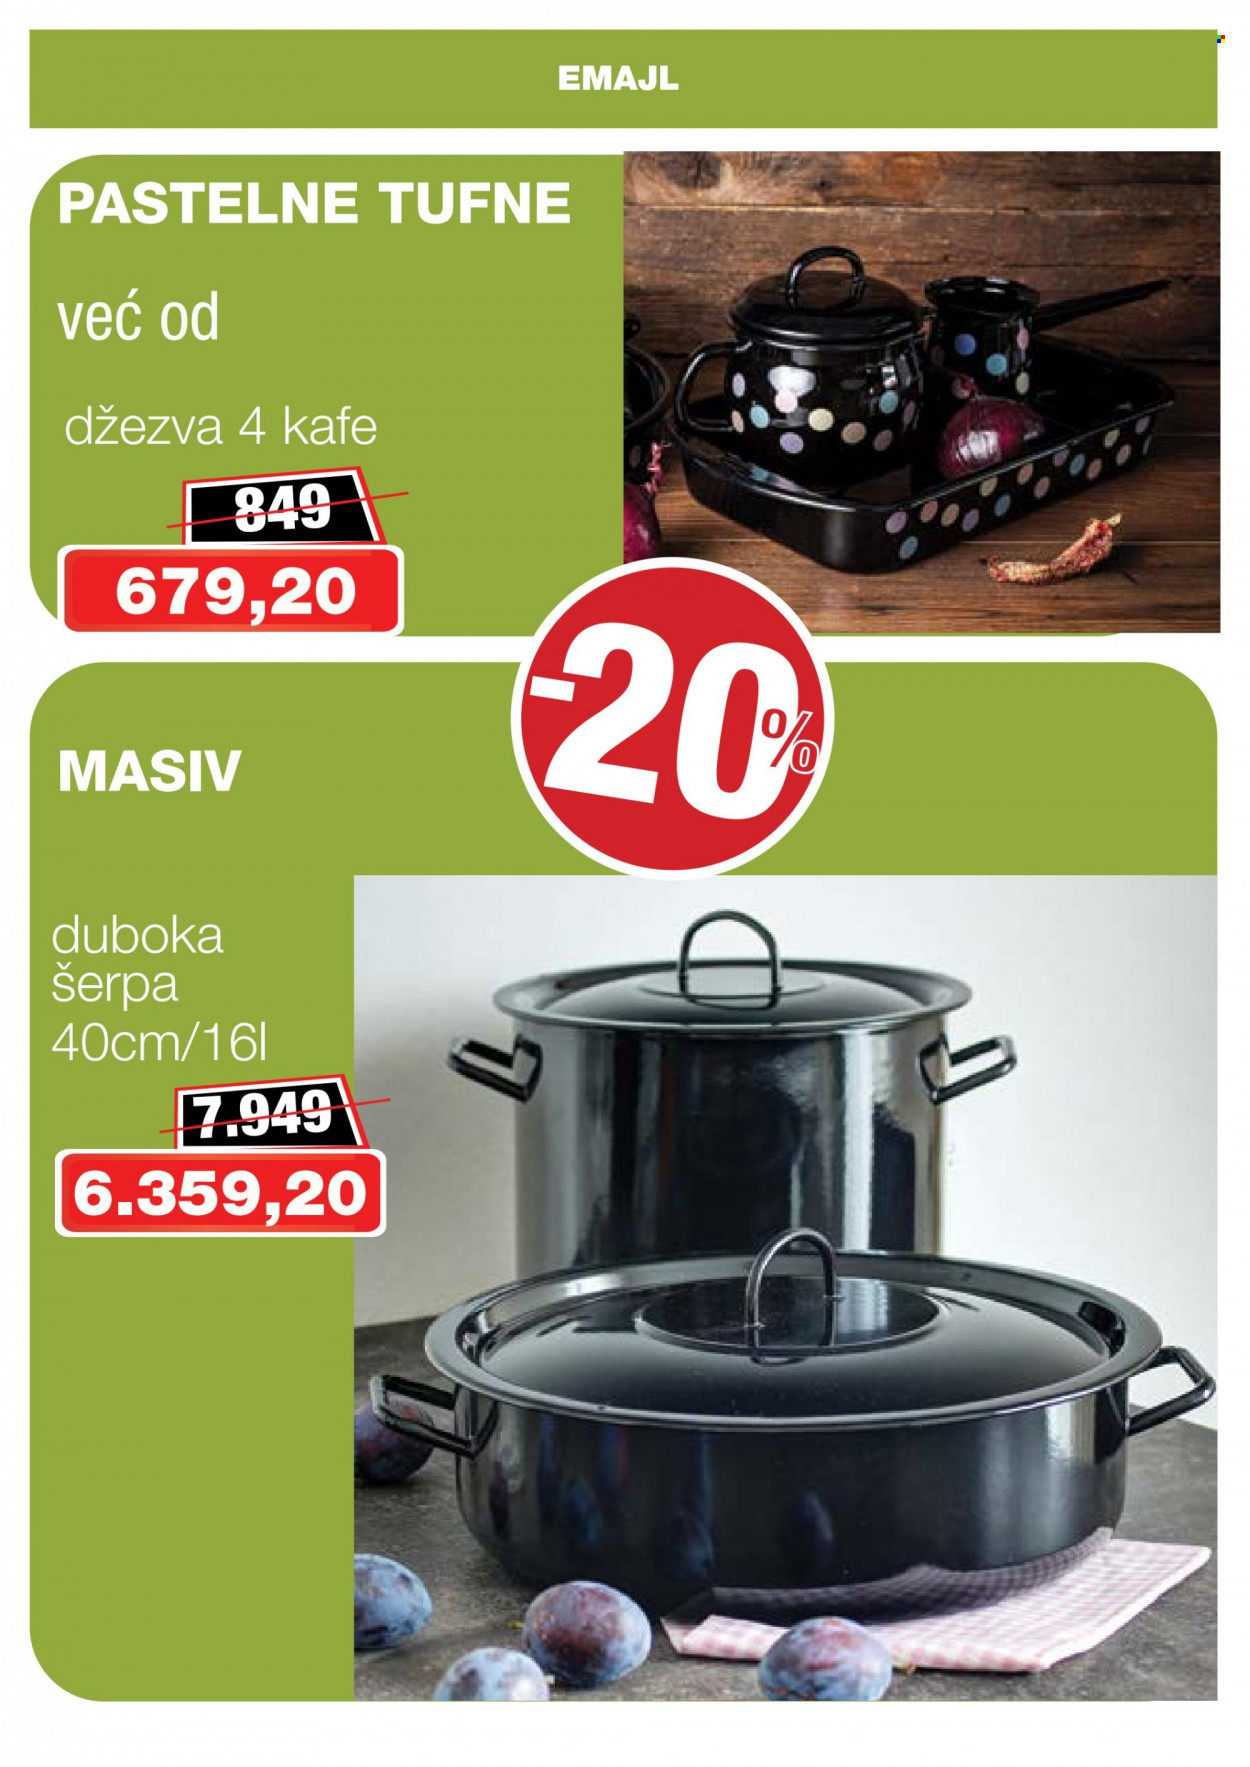 Metalac Market katalog - 01.01.2023 - 31.01.2023.